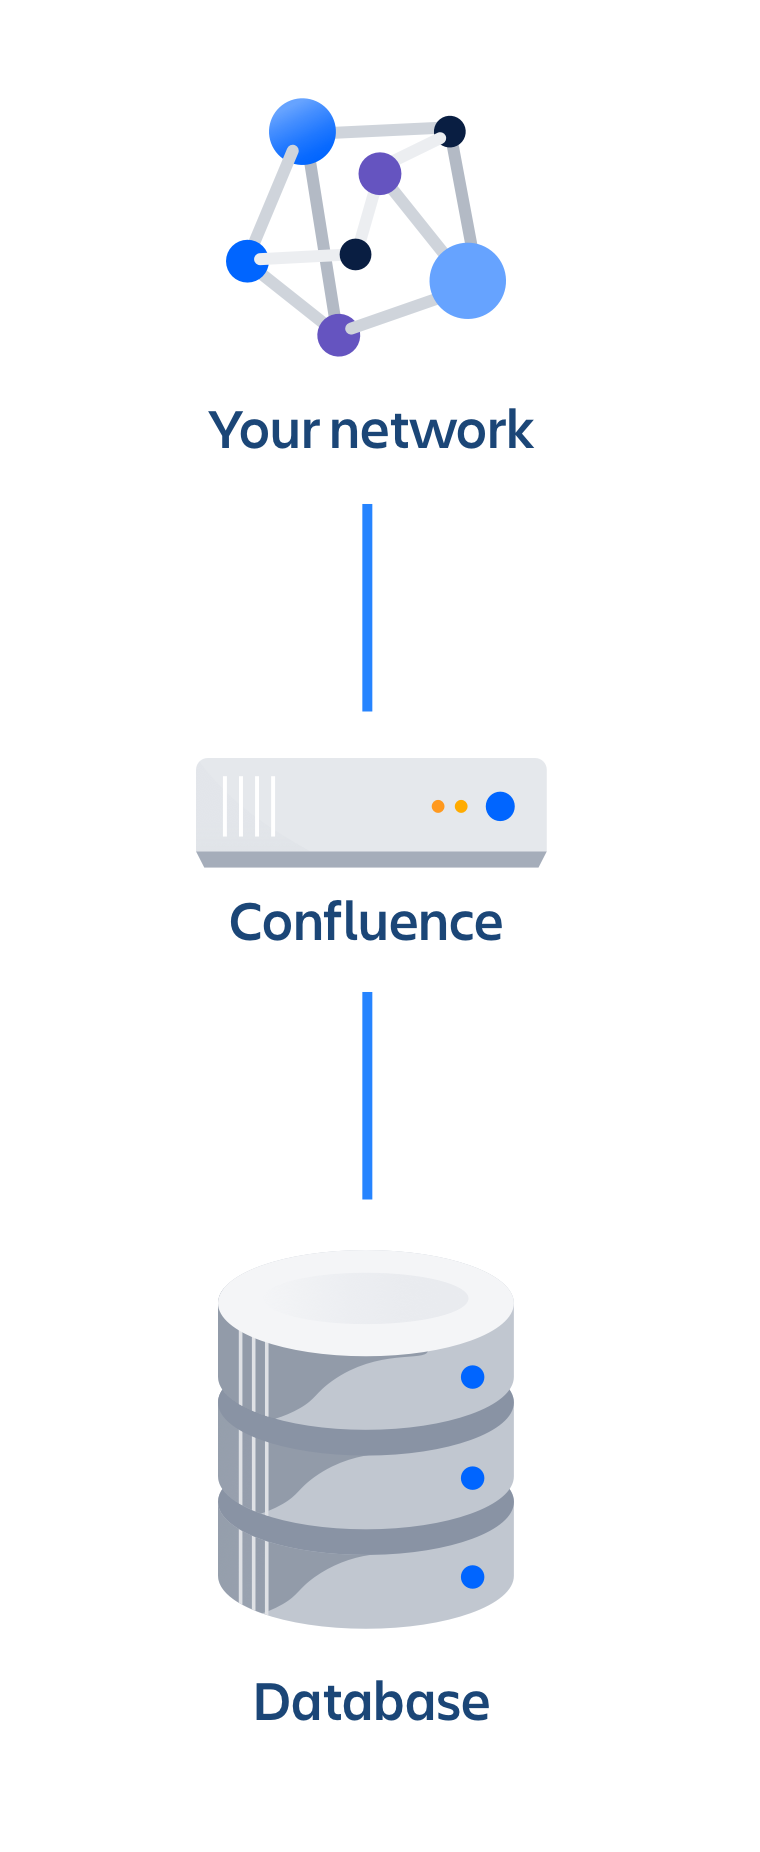 Running Confluence Data Center On A Single Node | Confluence Data Center  And Server 8.1 | Atlassian Documentation